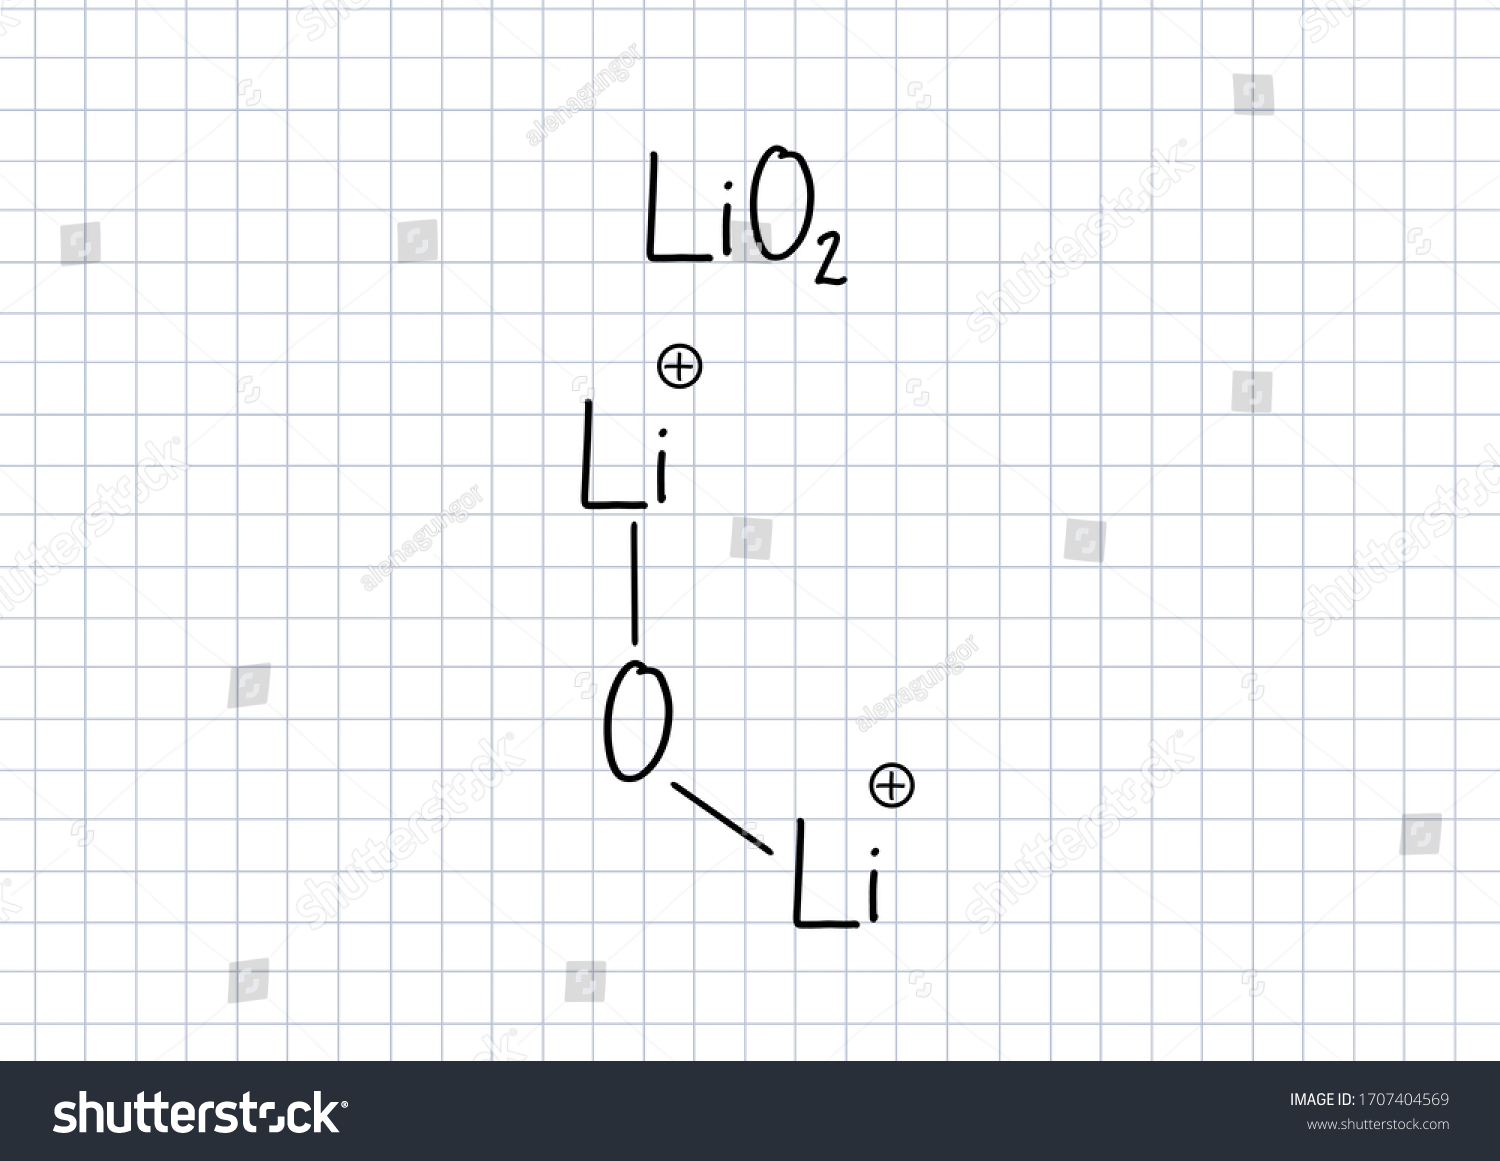 Lithium Oxide Formula Handwritten Chemical Formula Stock Illustration 1707404569